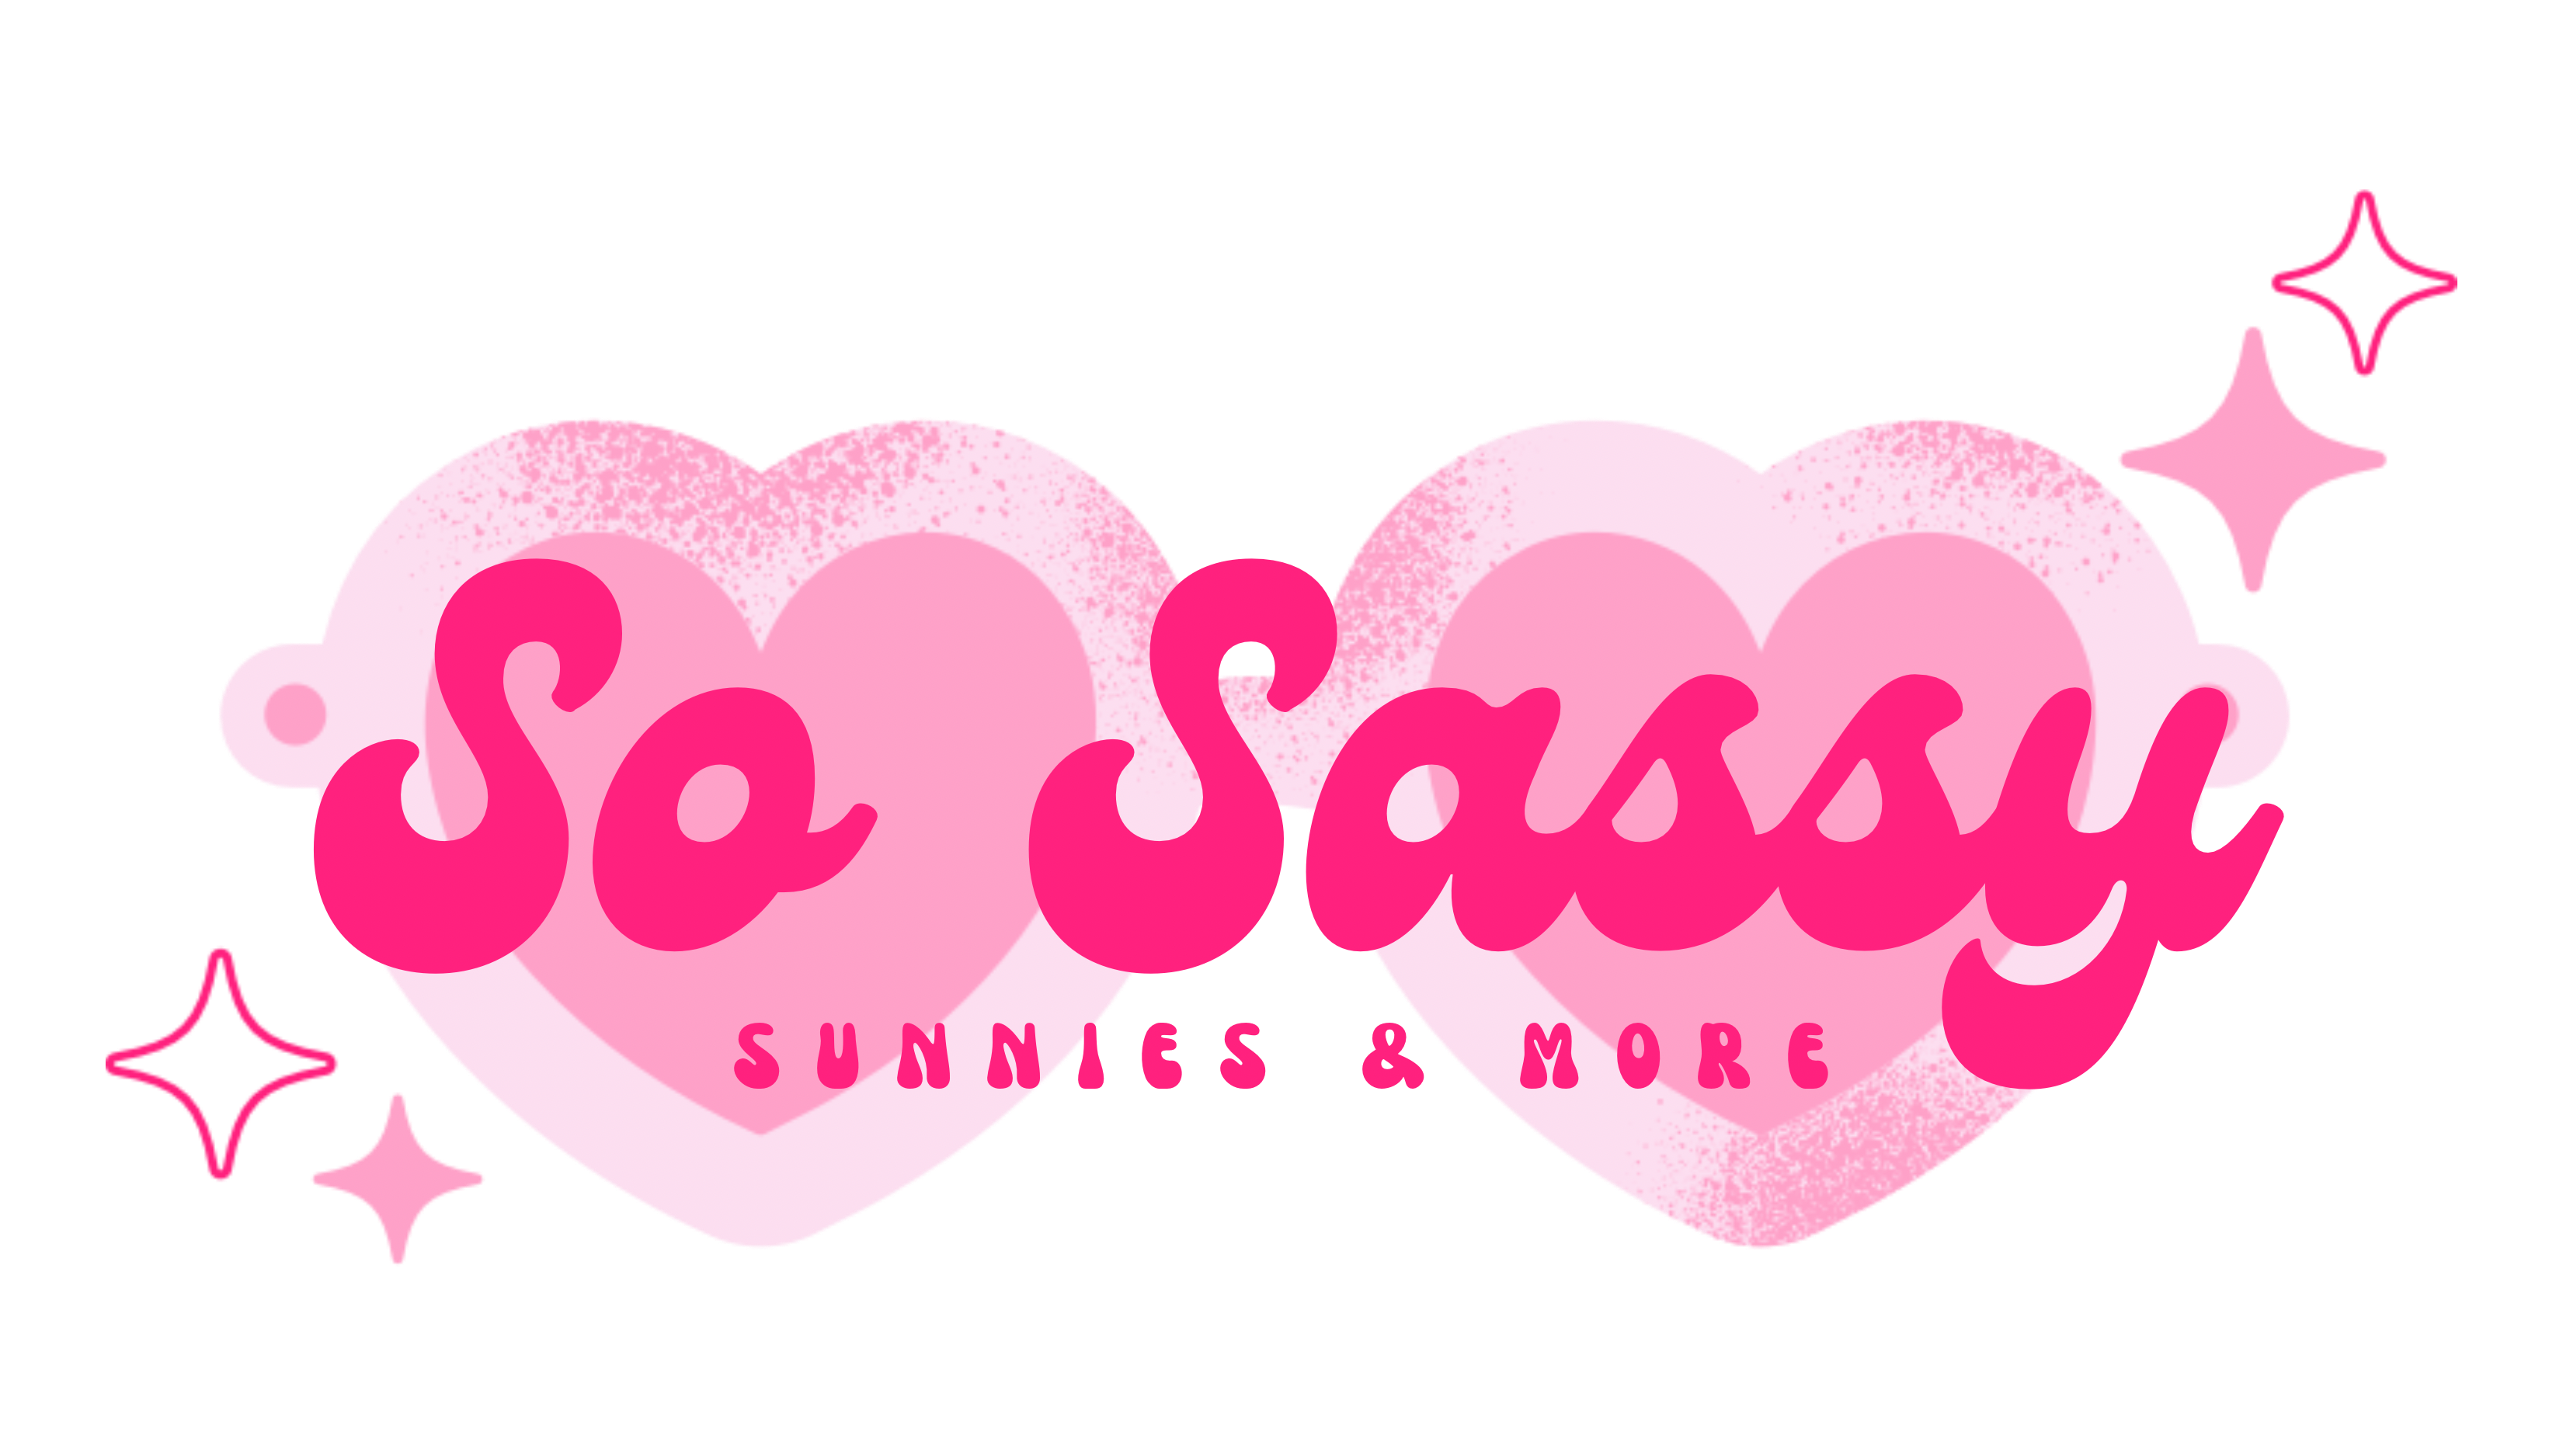 So Sassy | Sunnies & More